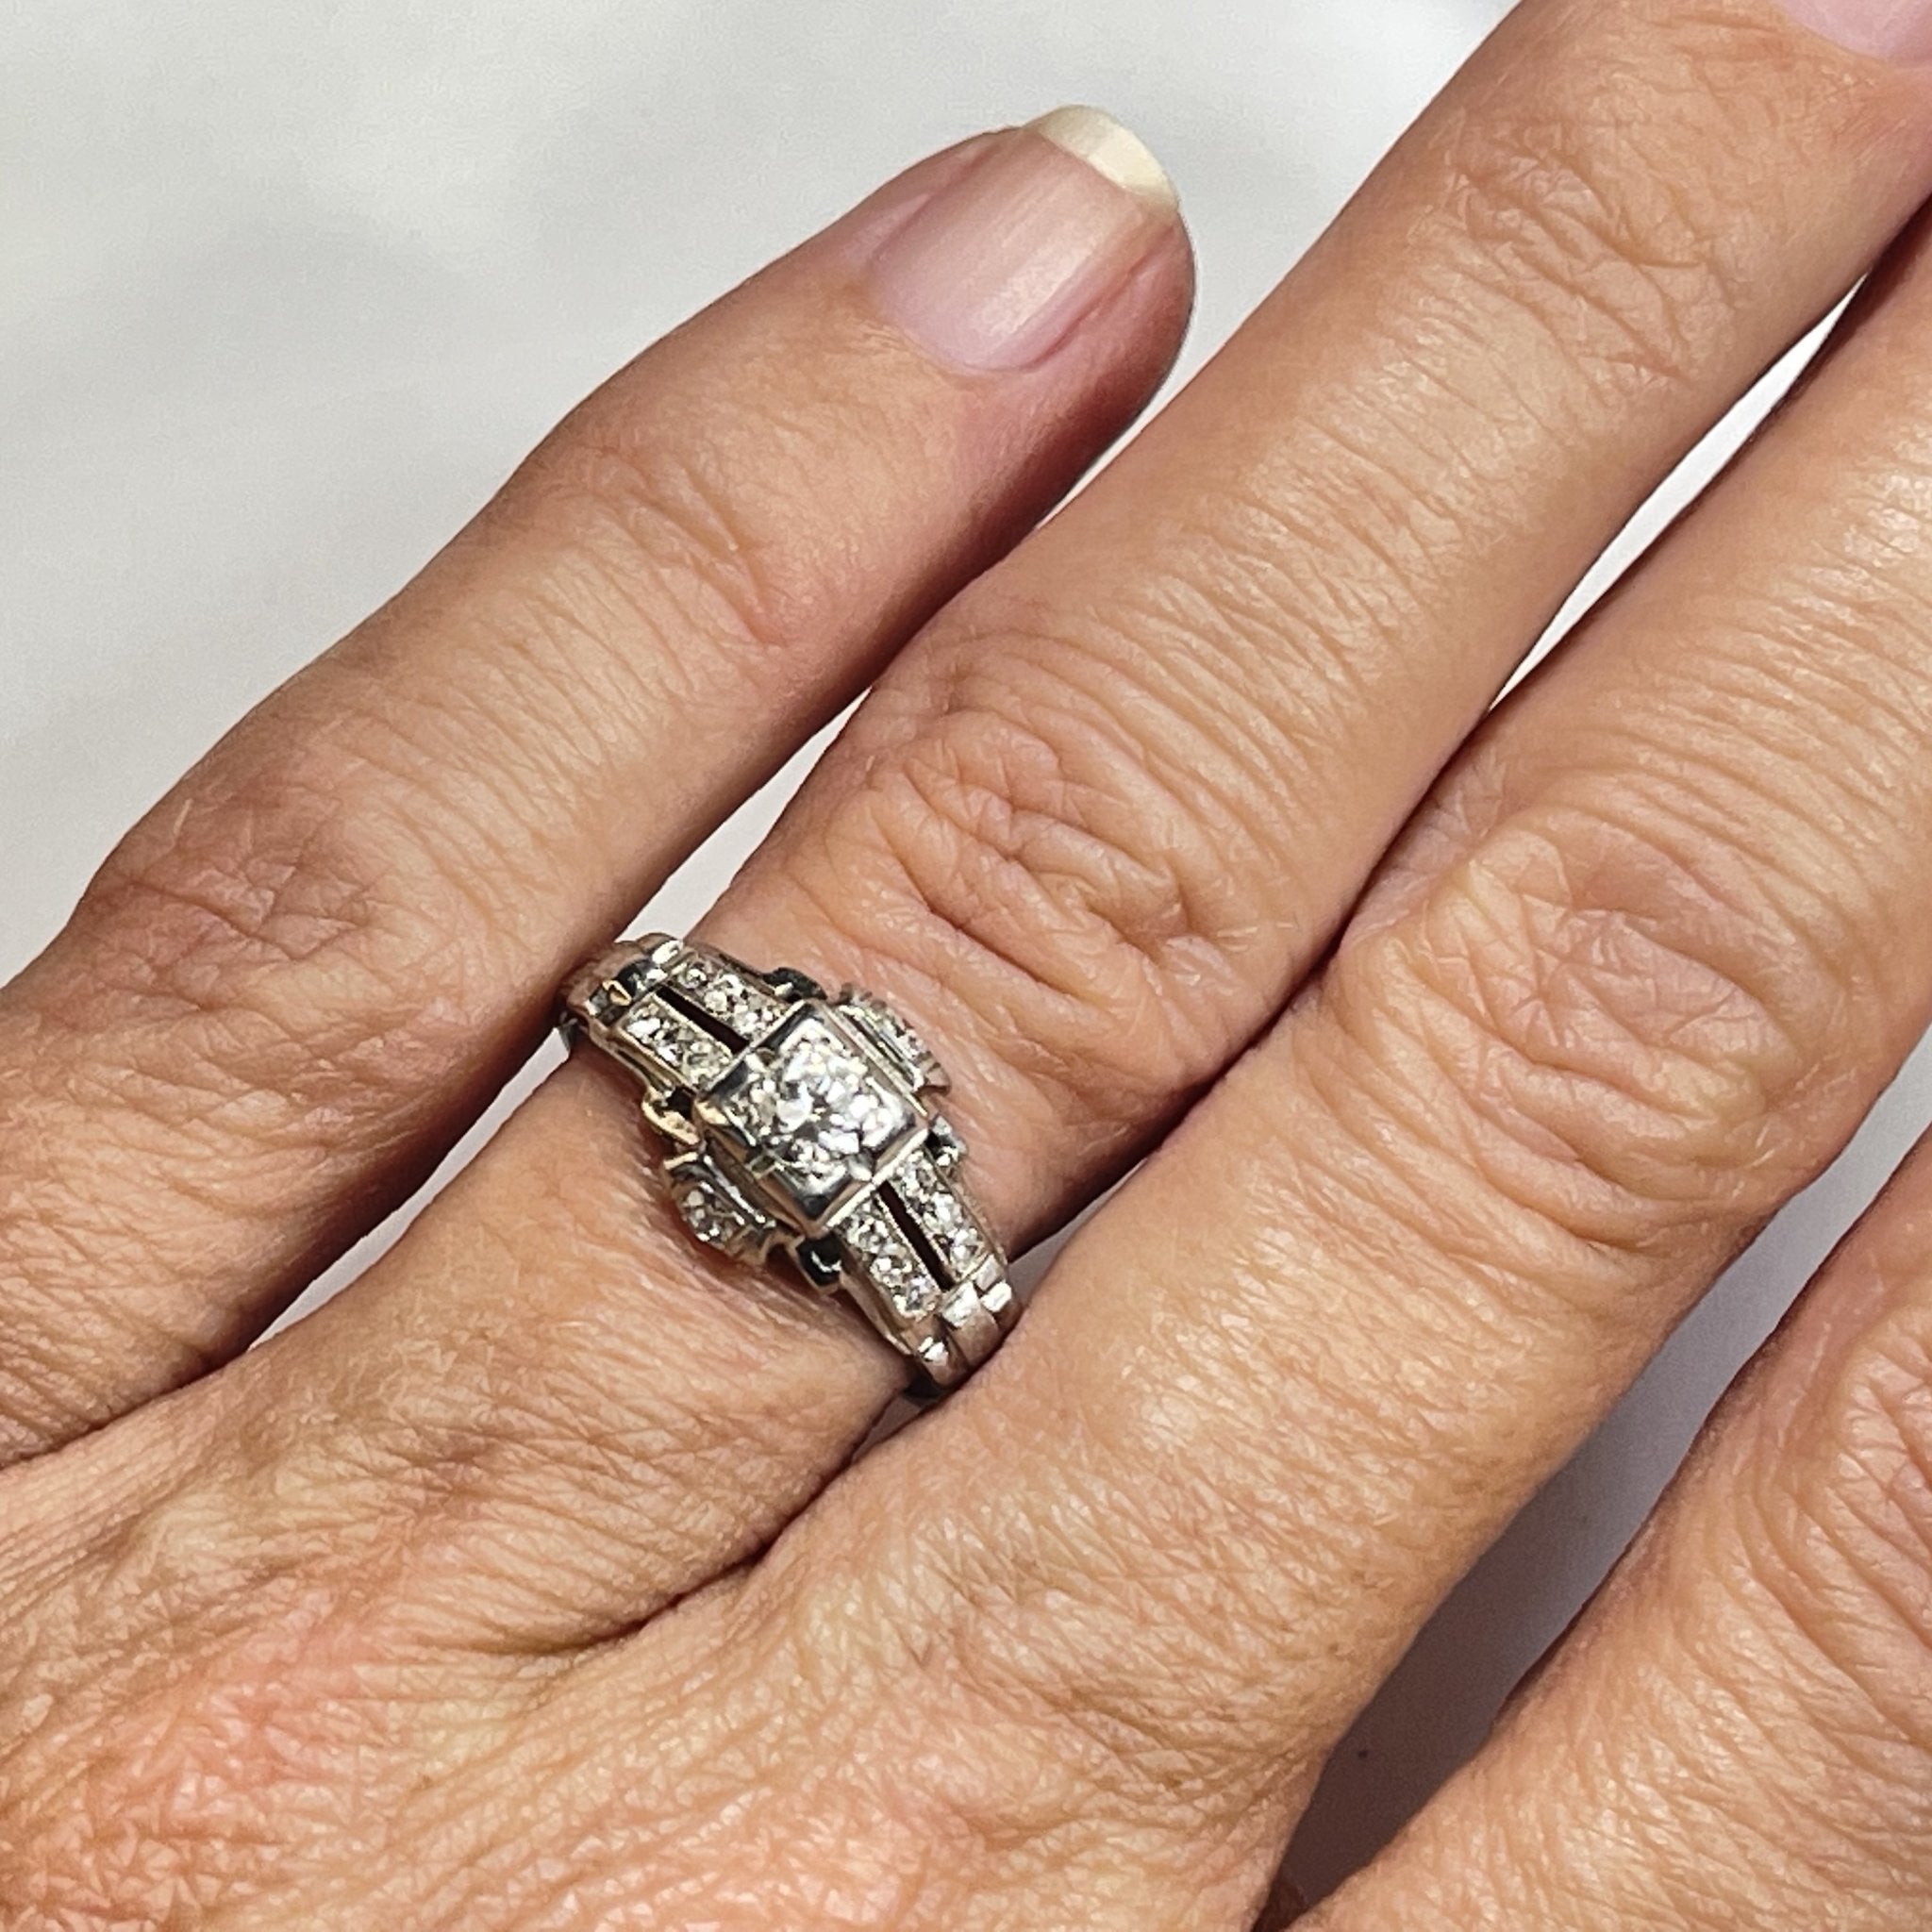 c. 1920s Art Deco Diamond and Sapphire Ring with Engraved Foliate Patt -  Pebble & Polish